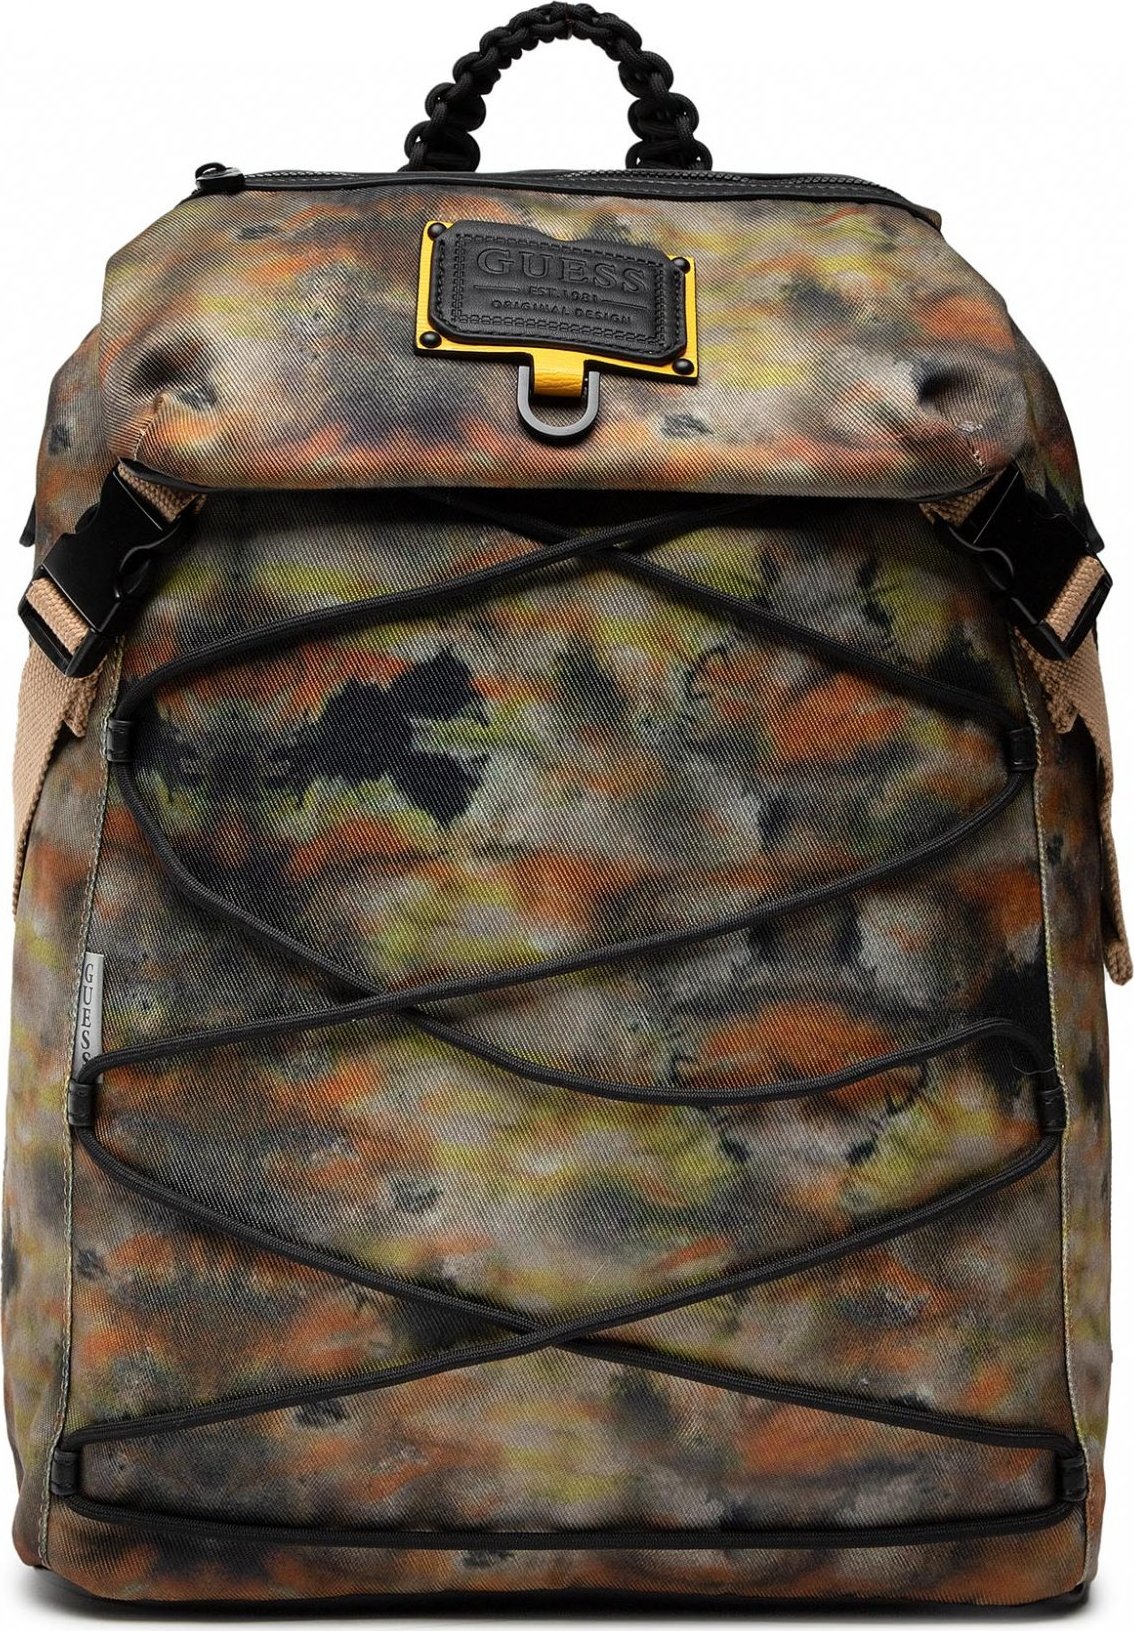 Guess Vice Flap Backpack HMVICM P2290